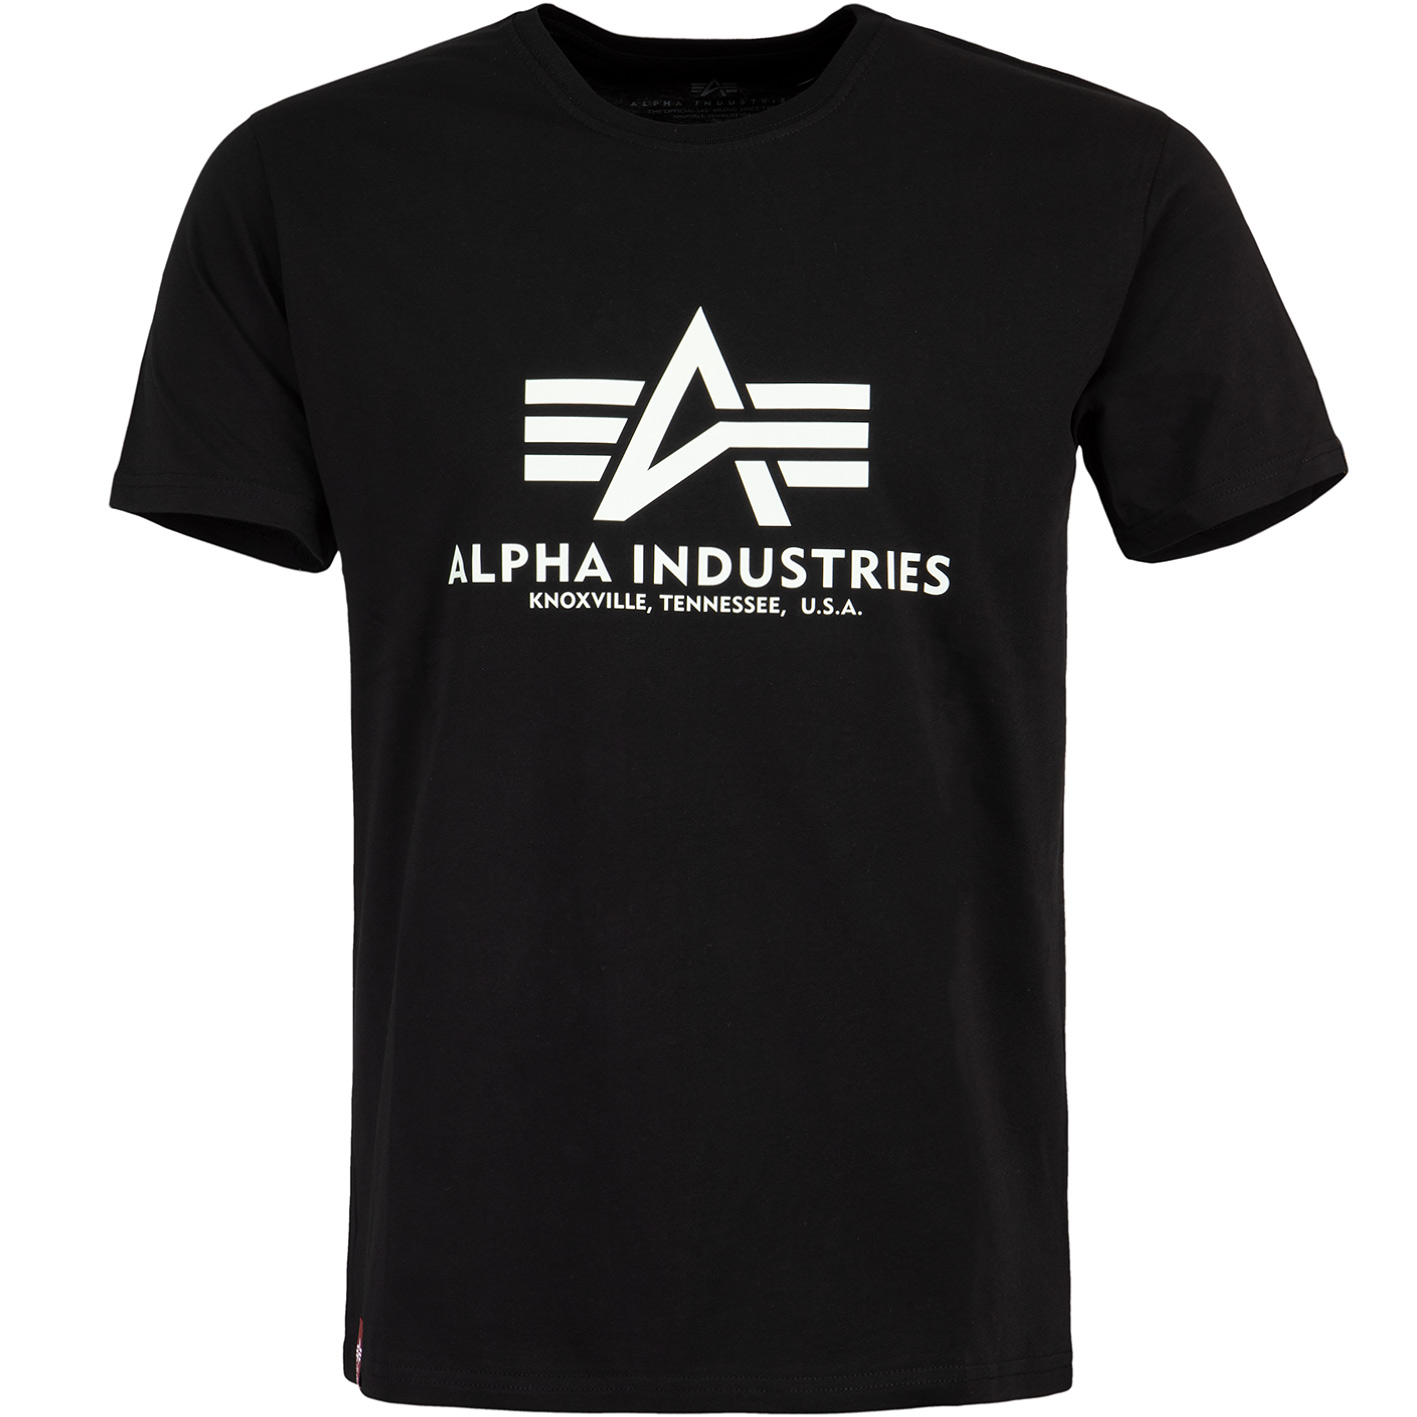 ☆ Alpha Industries Kryptonite Herren T-Shirt schwarz - hier bestellen!